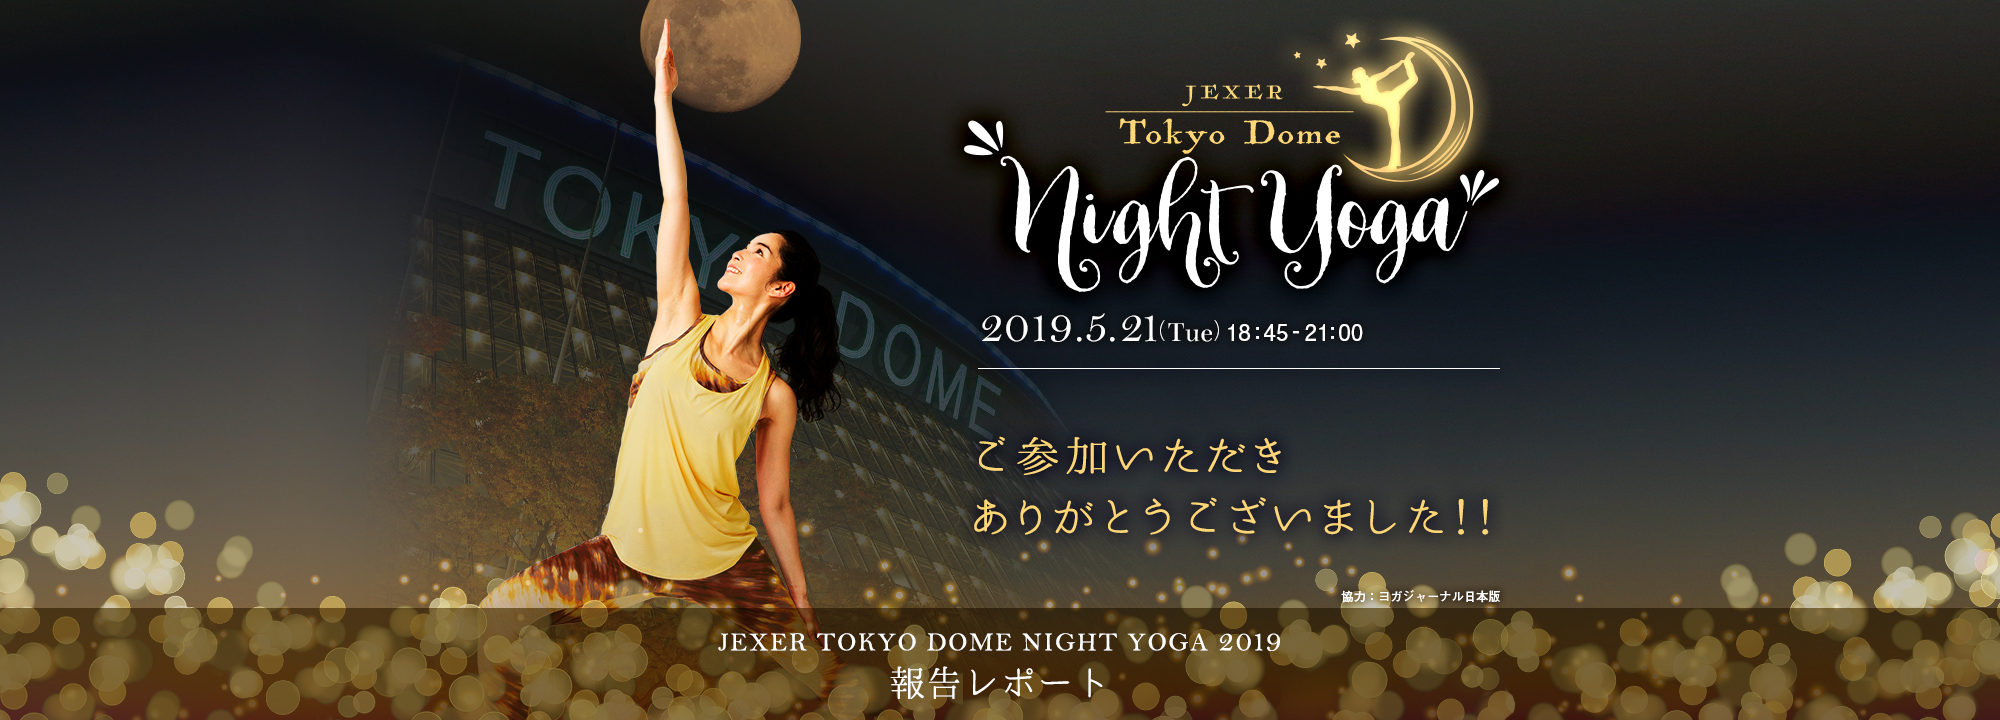 night yoga2019報告ページ